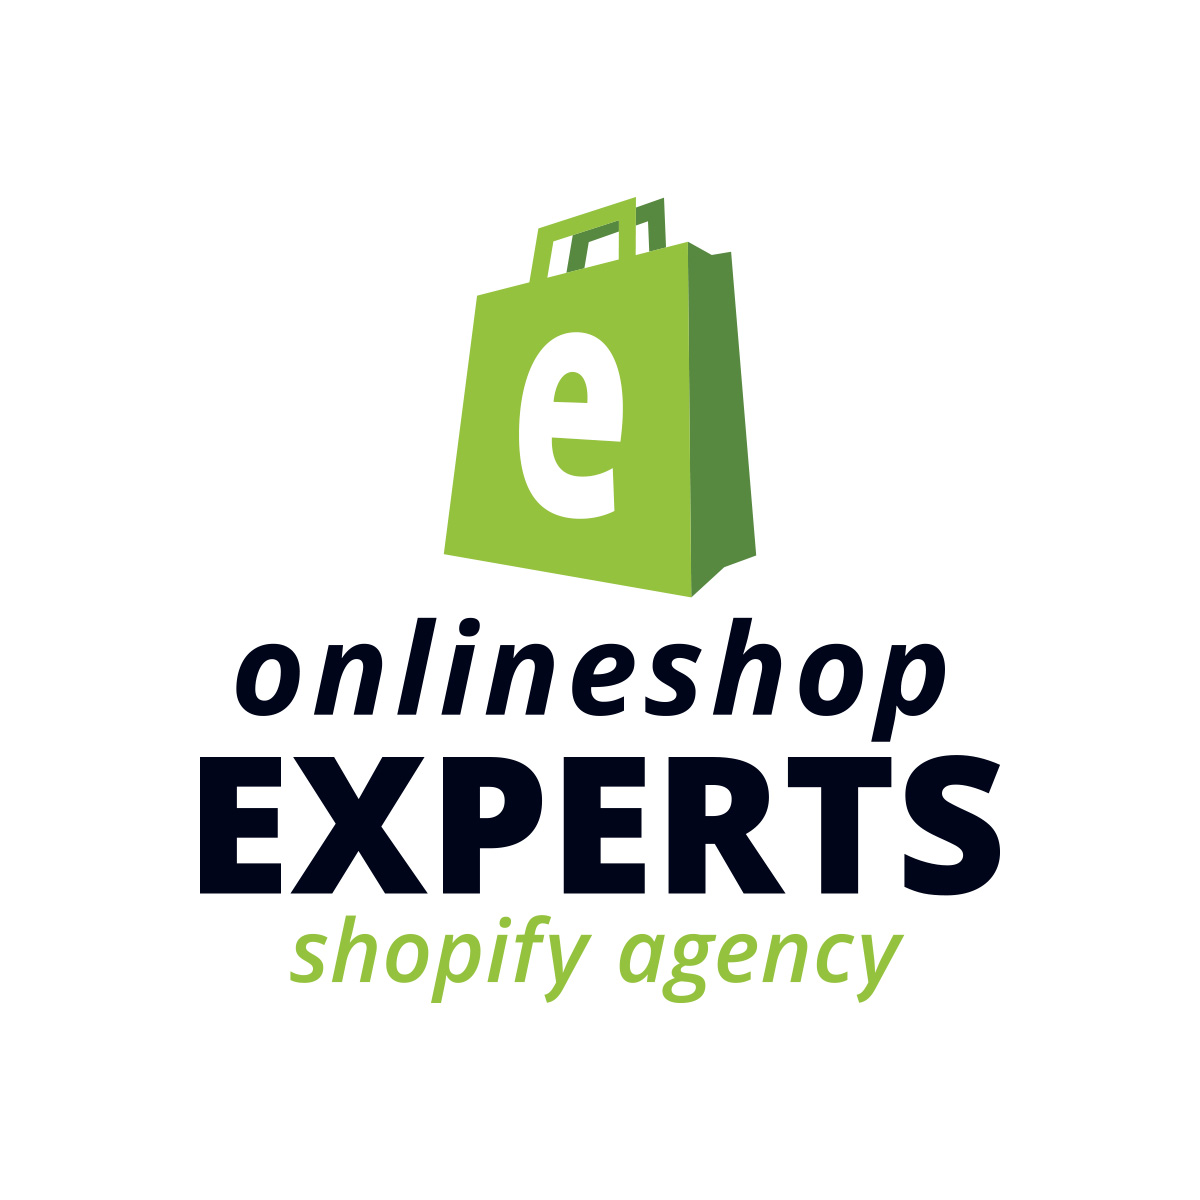 (c) Onlineshop-experts.ch